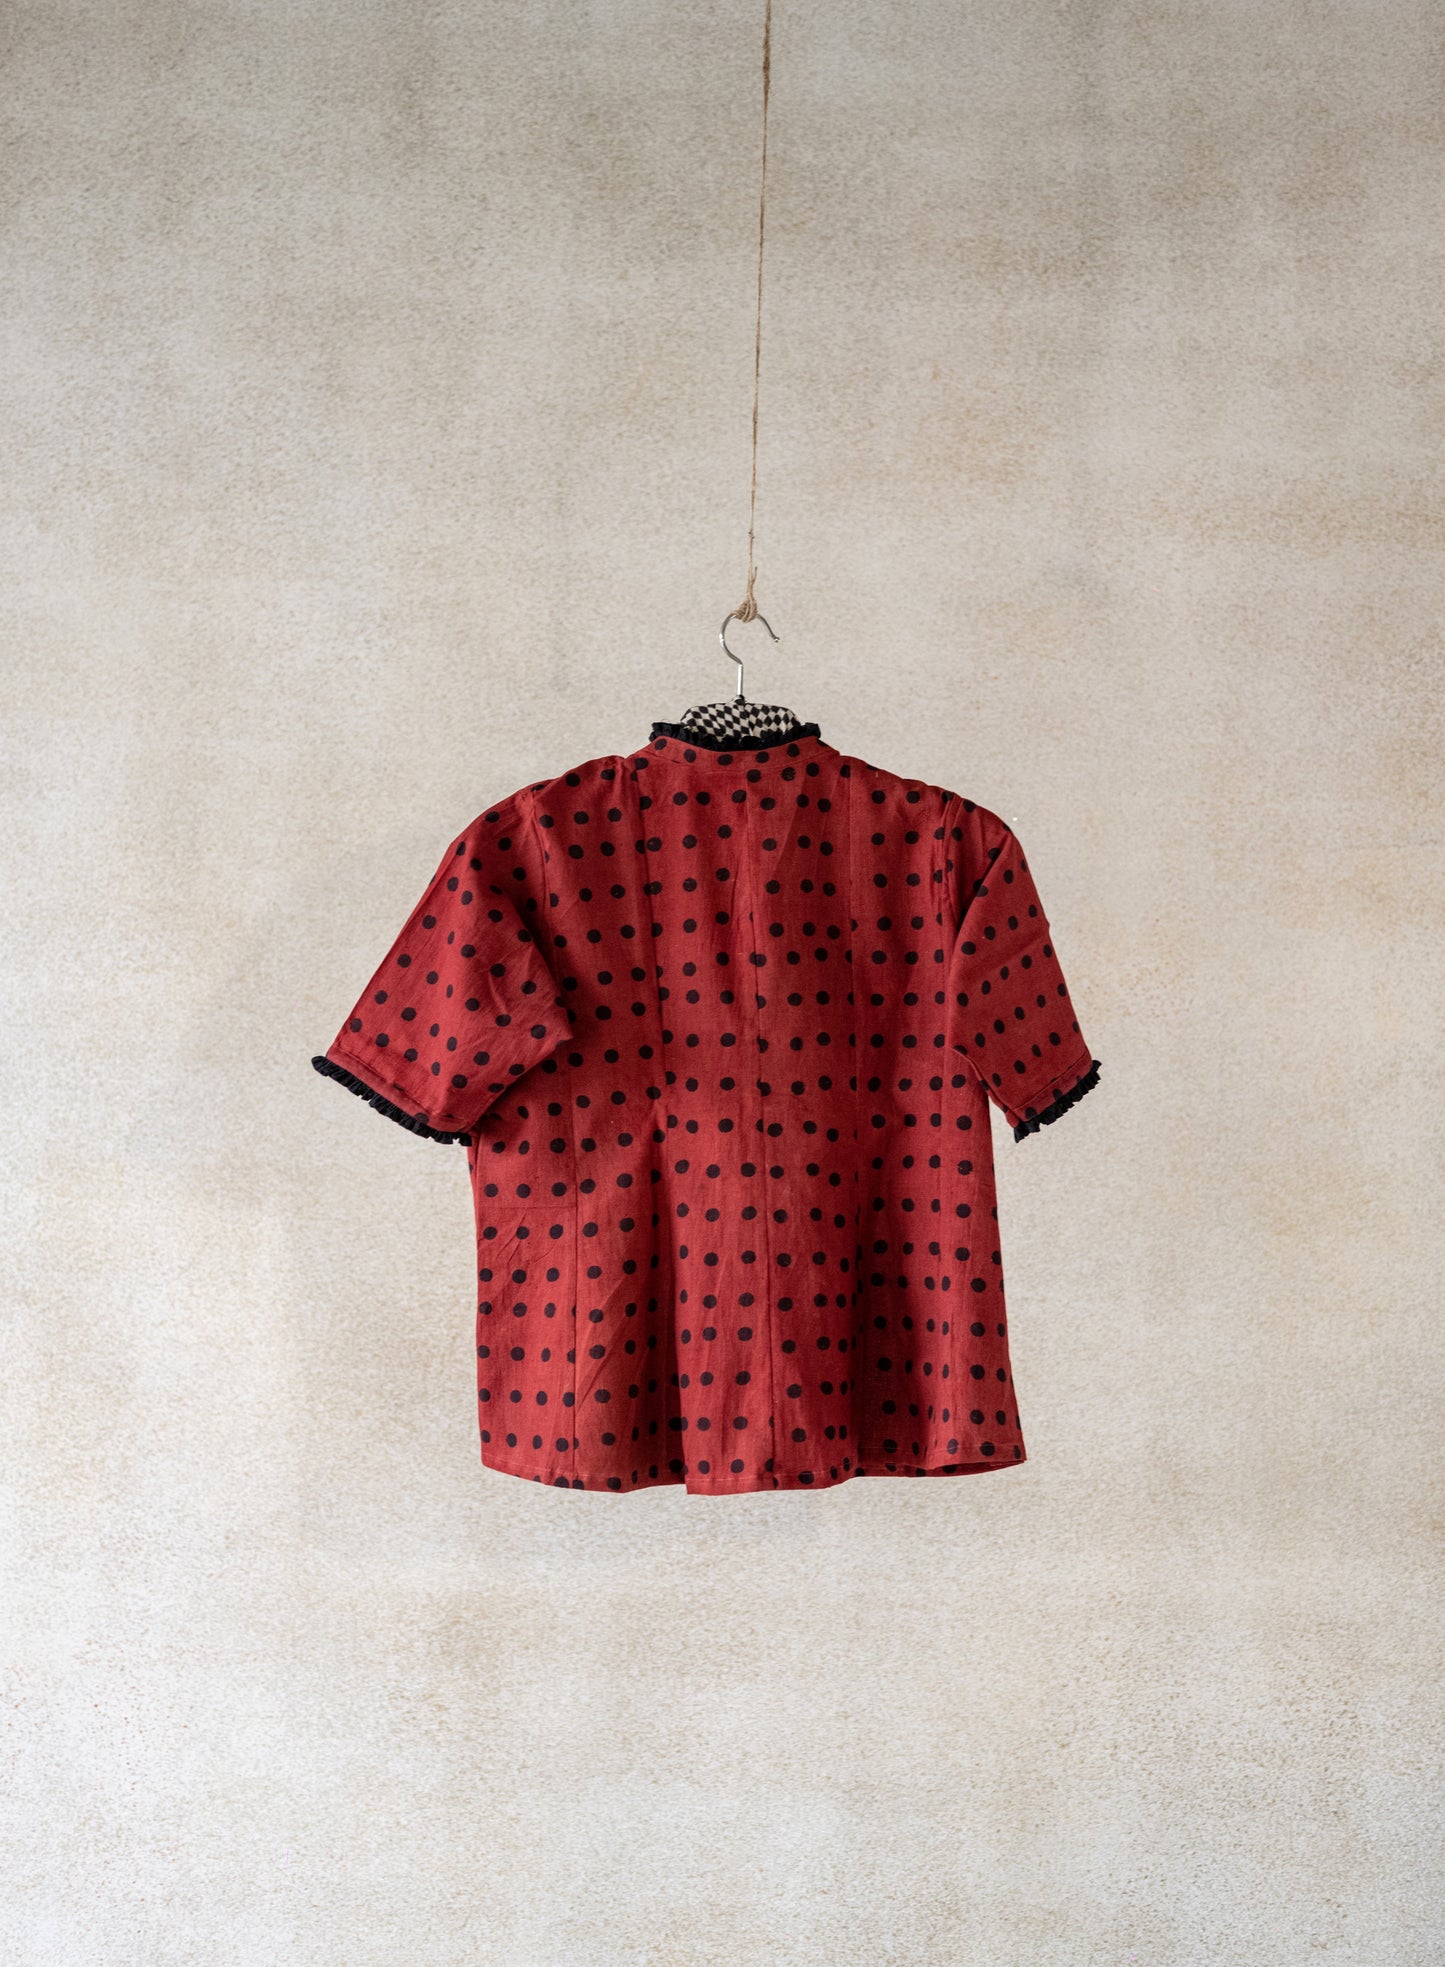 Madder dyed polka dots women shirt, Sustainable fashion